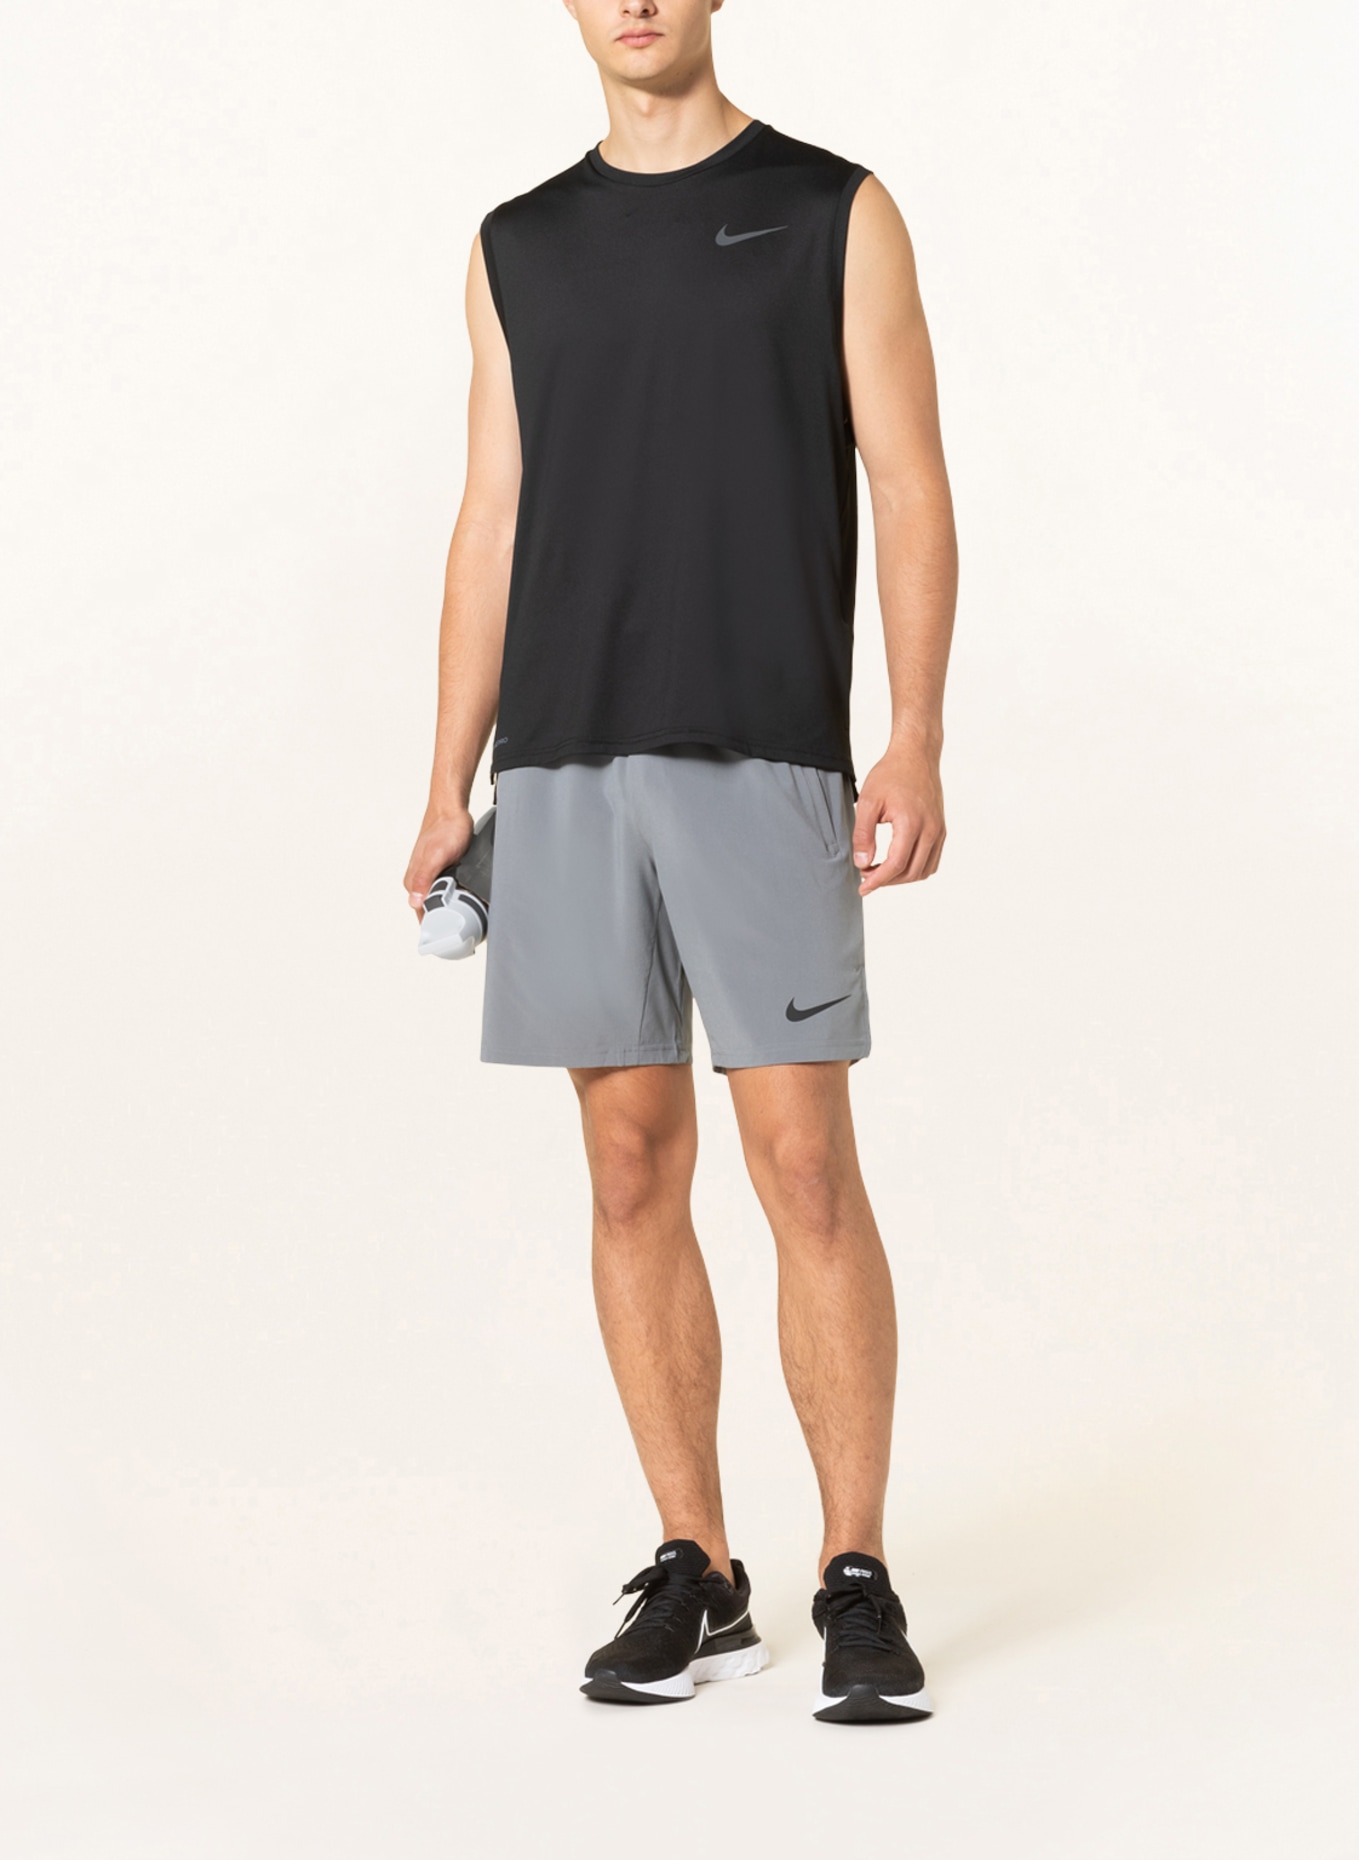 Nike, Dri-FIT Training Shorts Mens, Grey